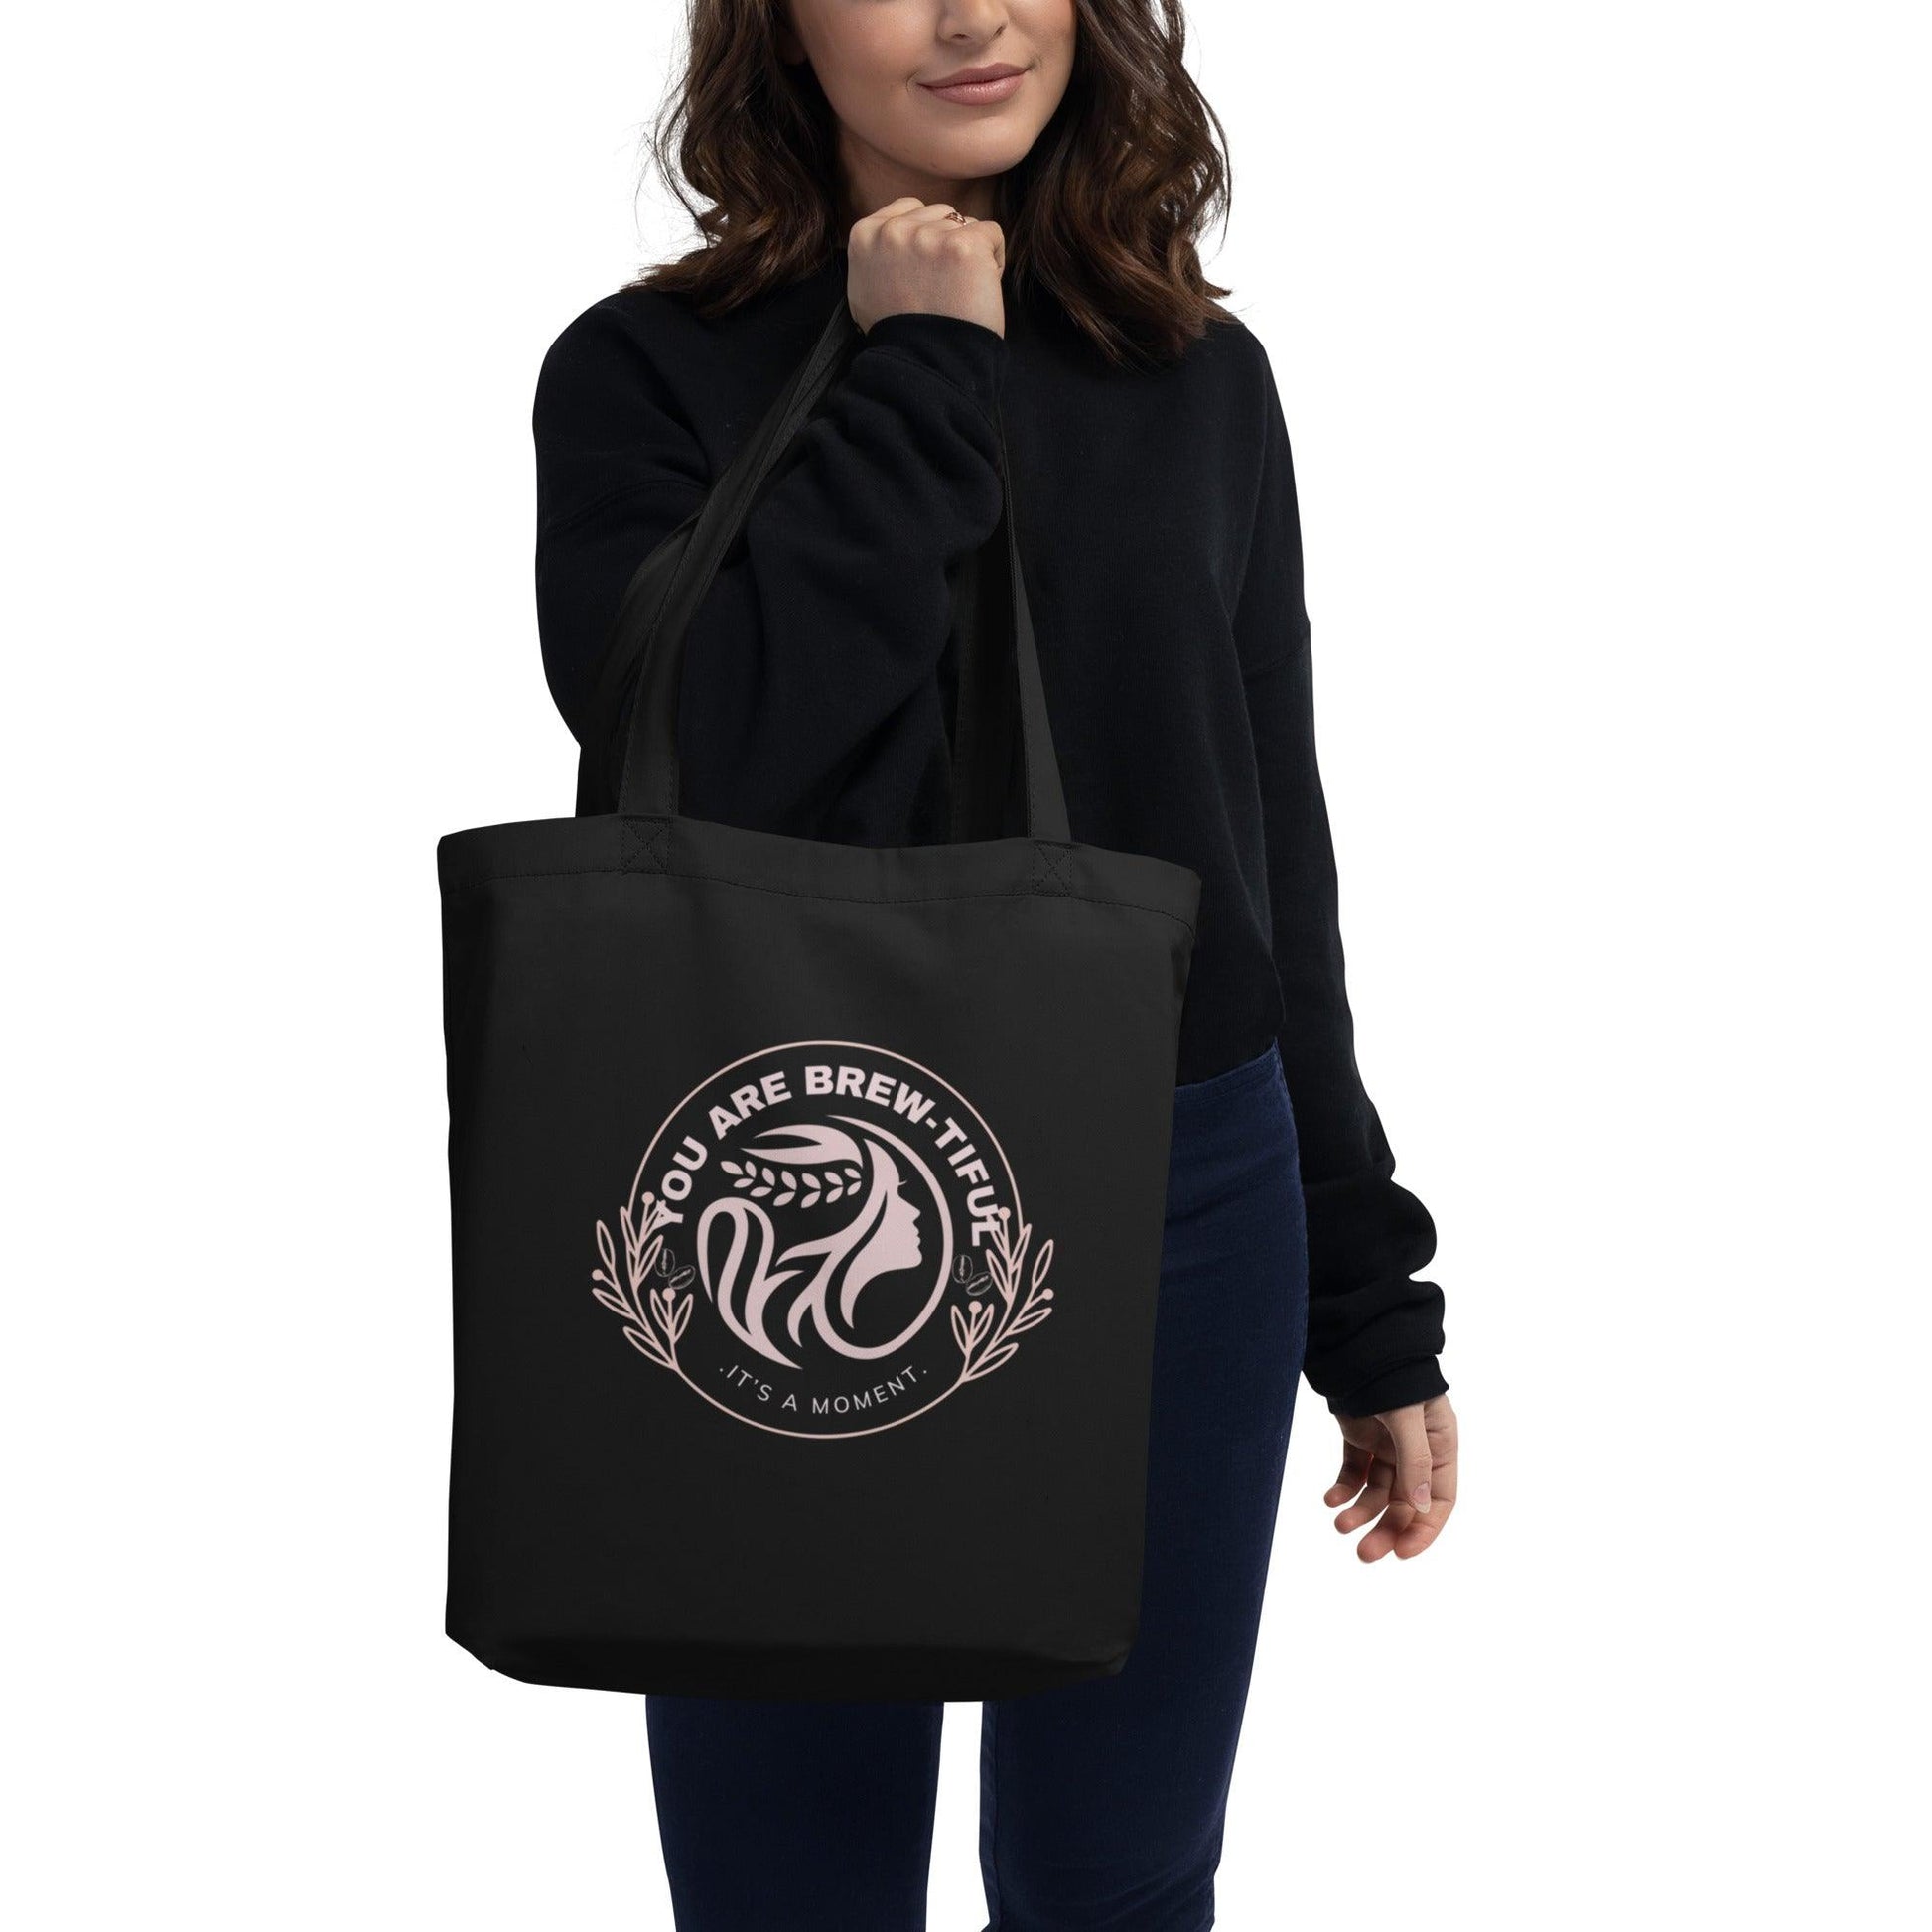 Luxury Eco Tote Bag gift - COFFEEBRE